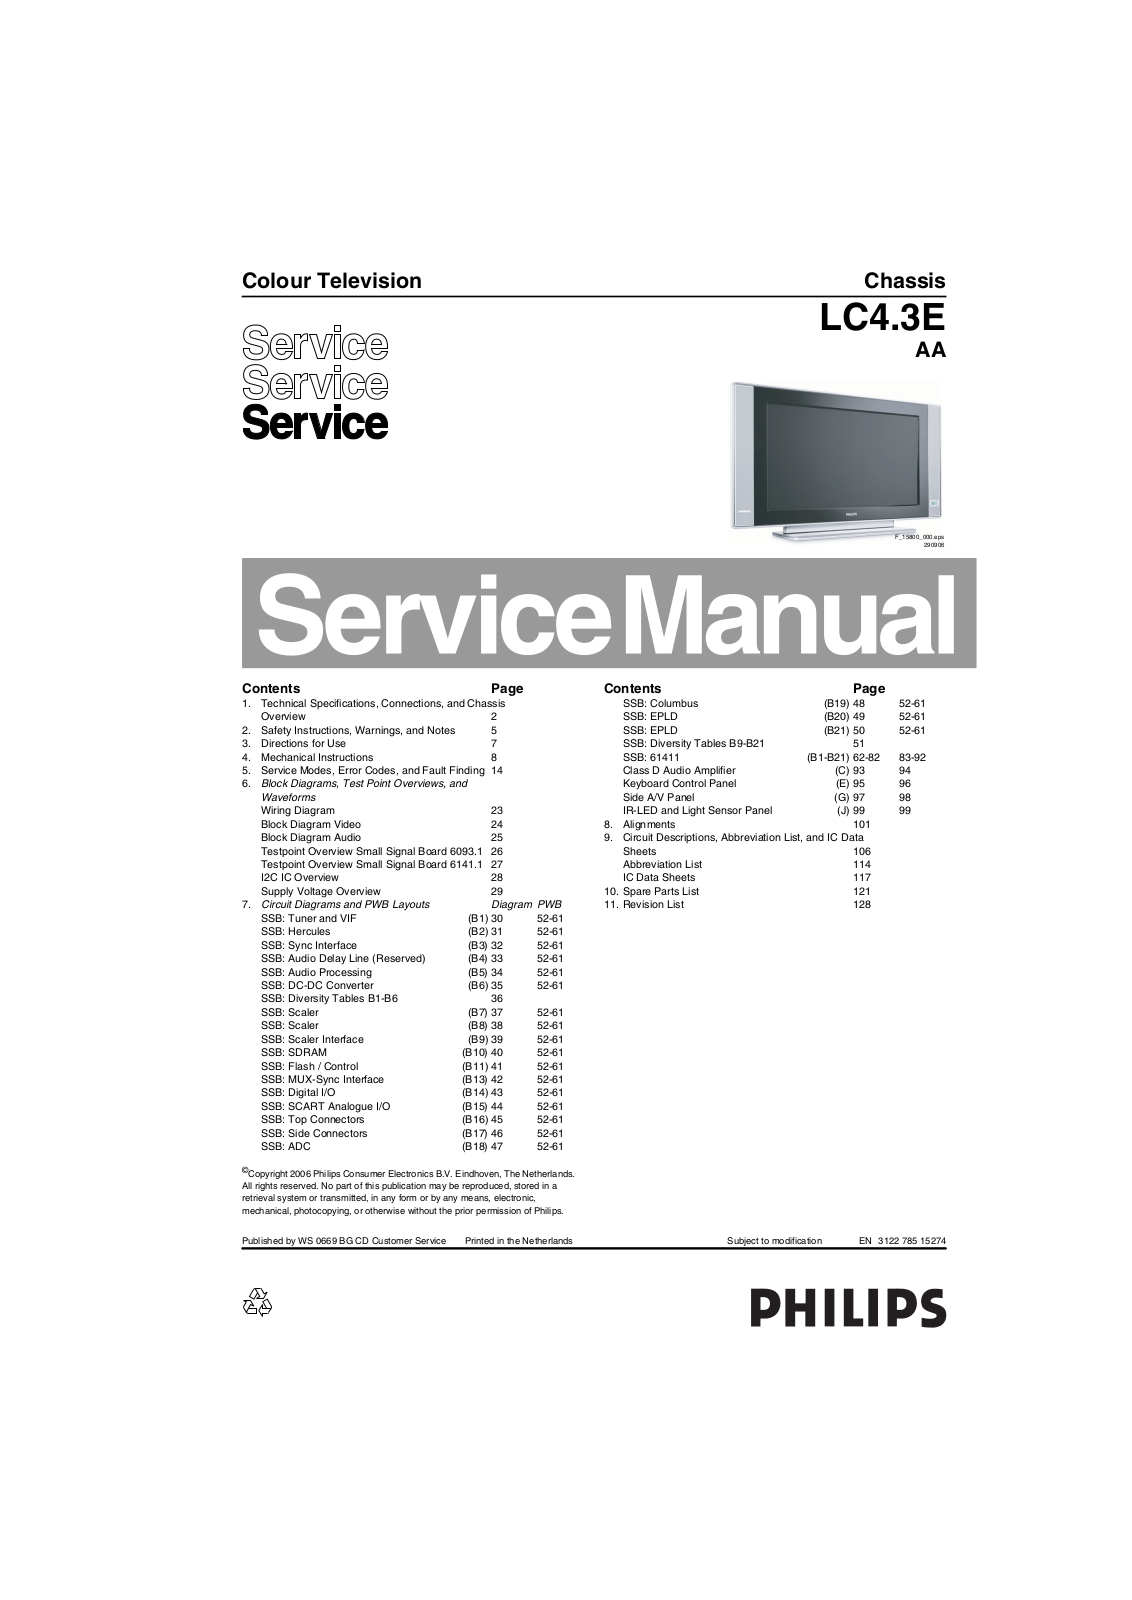 Philips LC4.41E AA Service Manual